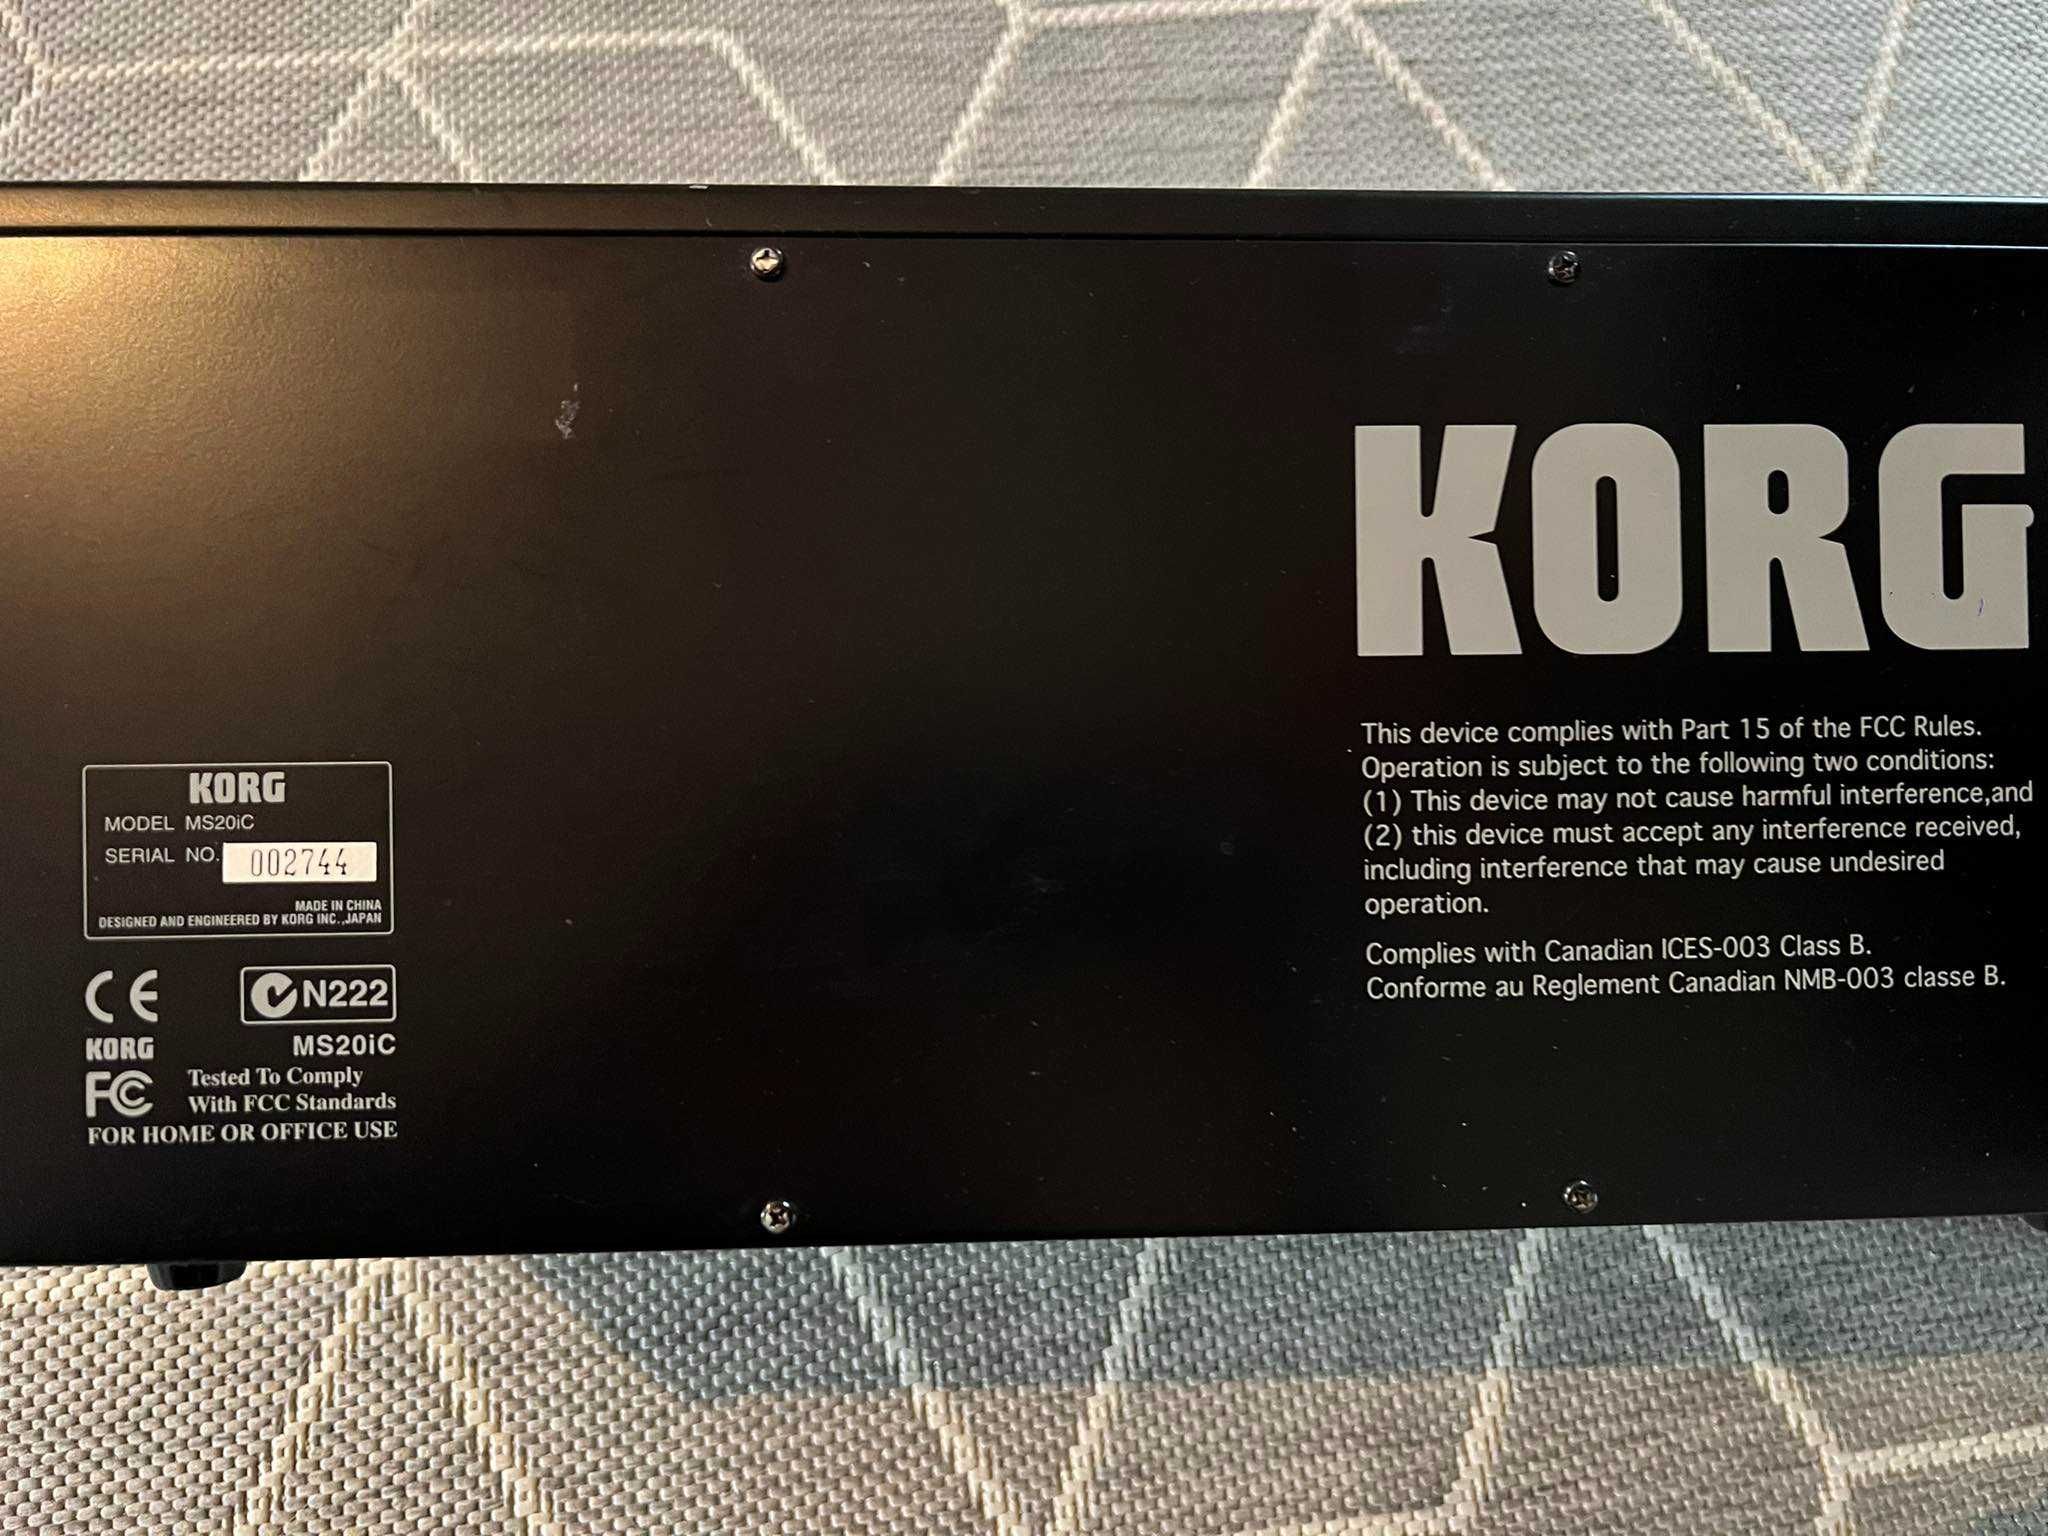 Korg MS20ic MS20 midi controller